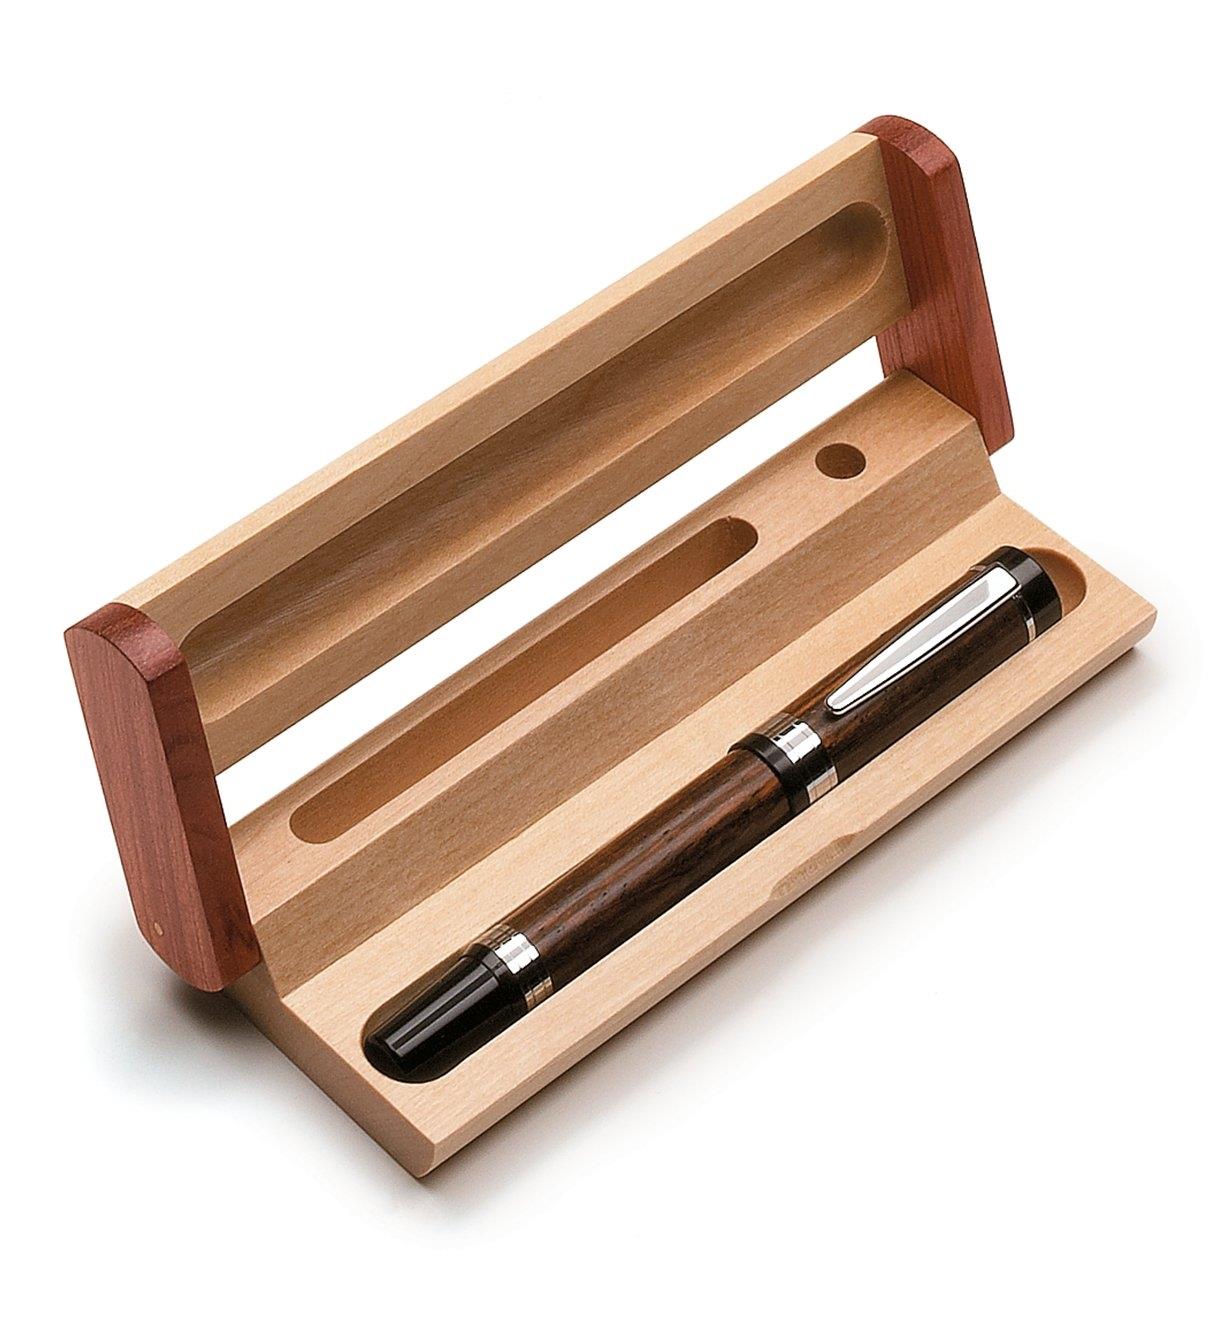 Hardwood case holding a wooden pen